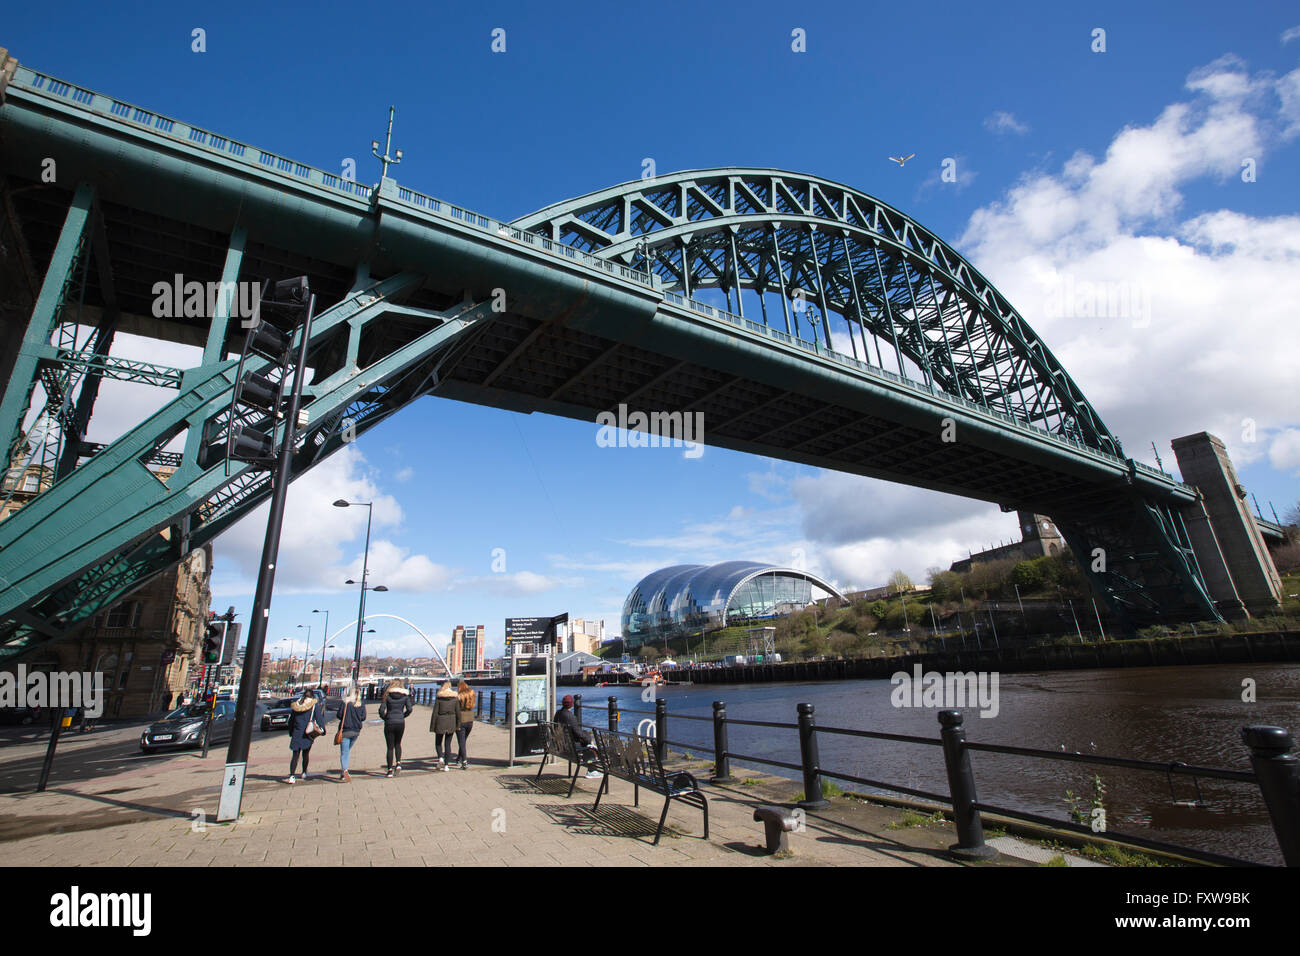 The Tyne Bridge, linking the City of Newcastle with the town of Gateshead, Newcastle, Tyneside, North England, UK Stock Photo